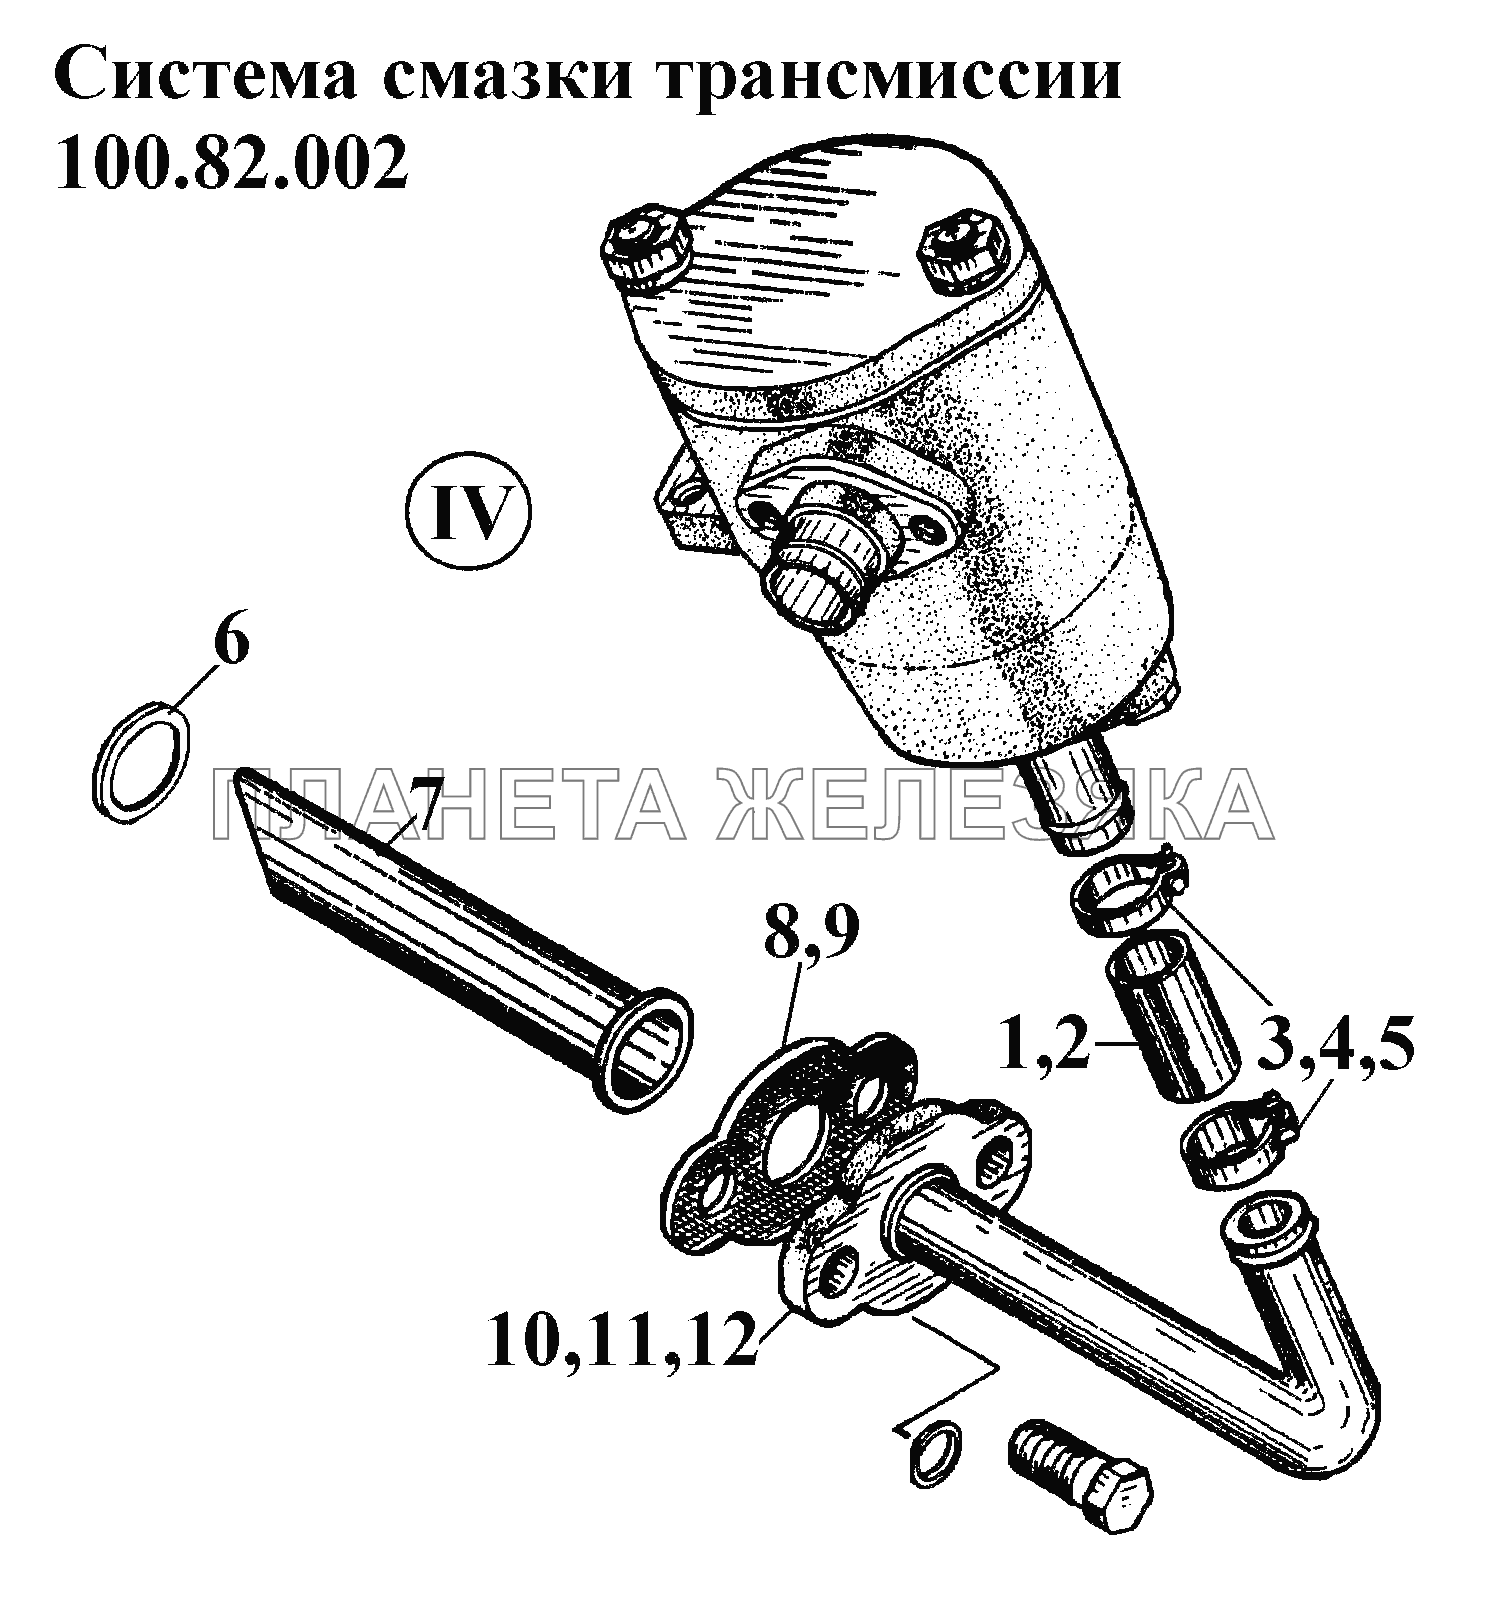 Система смазки трансмиссии 100.82.002 (4) ВТ-100Д